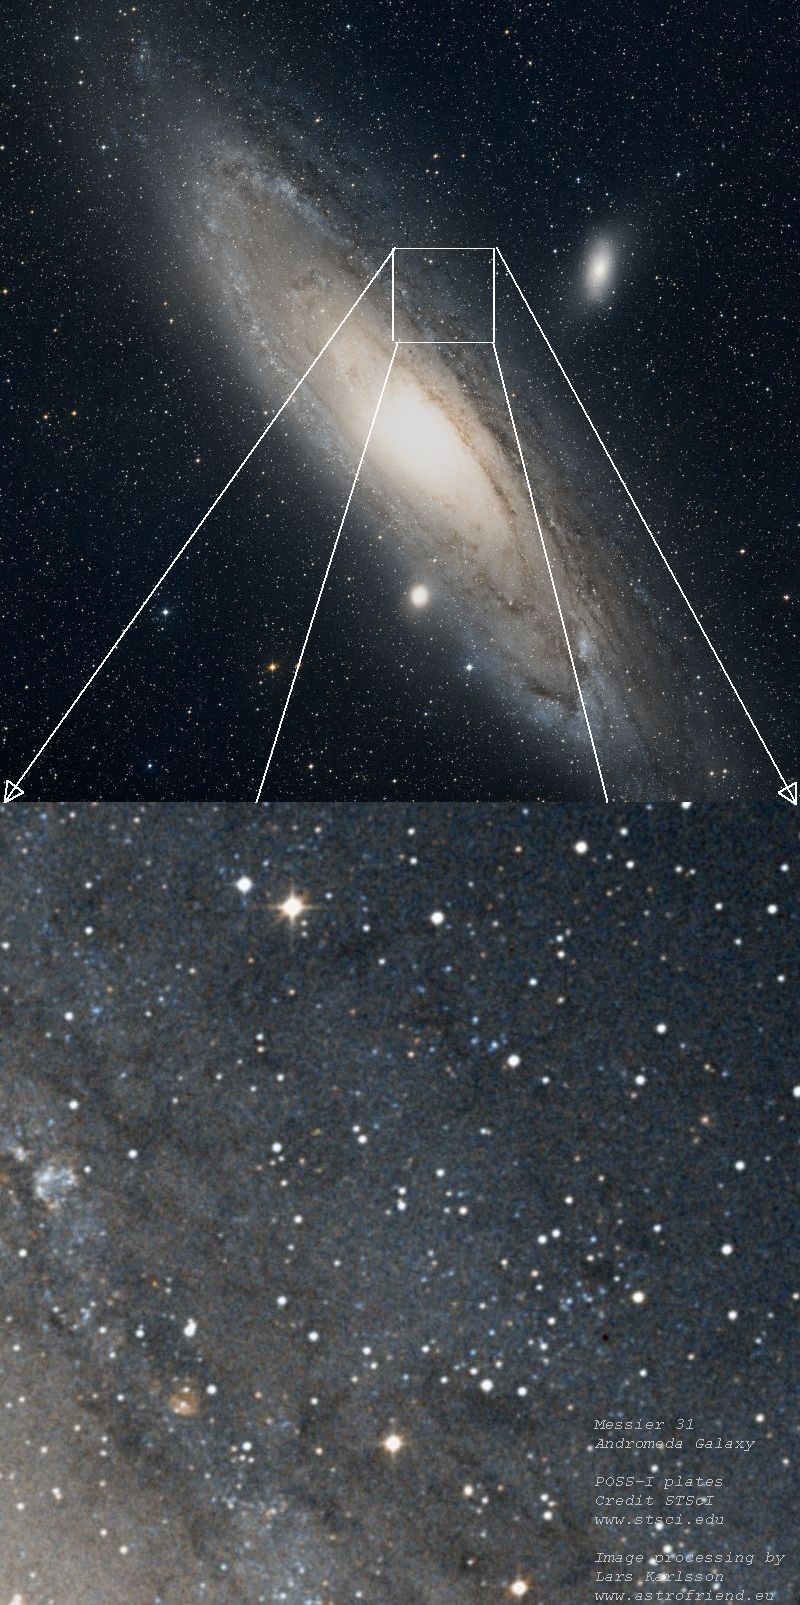 POSS-I: M31, Andromeda Galaxy